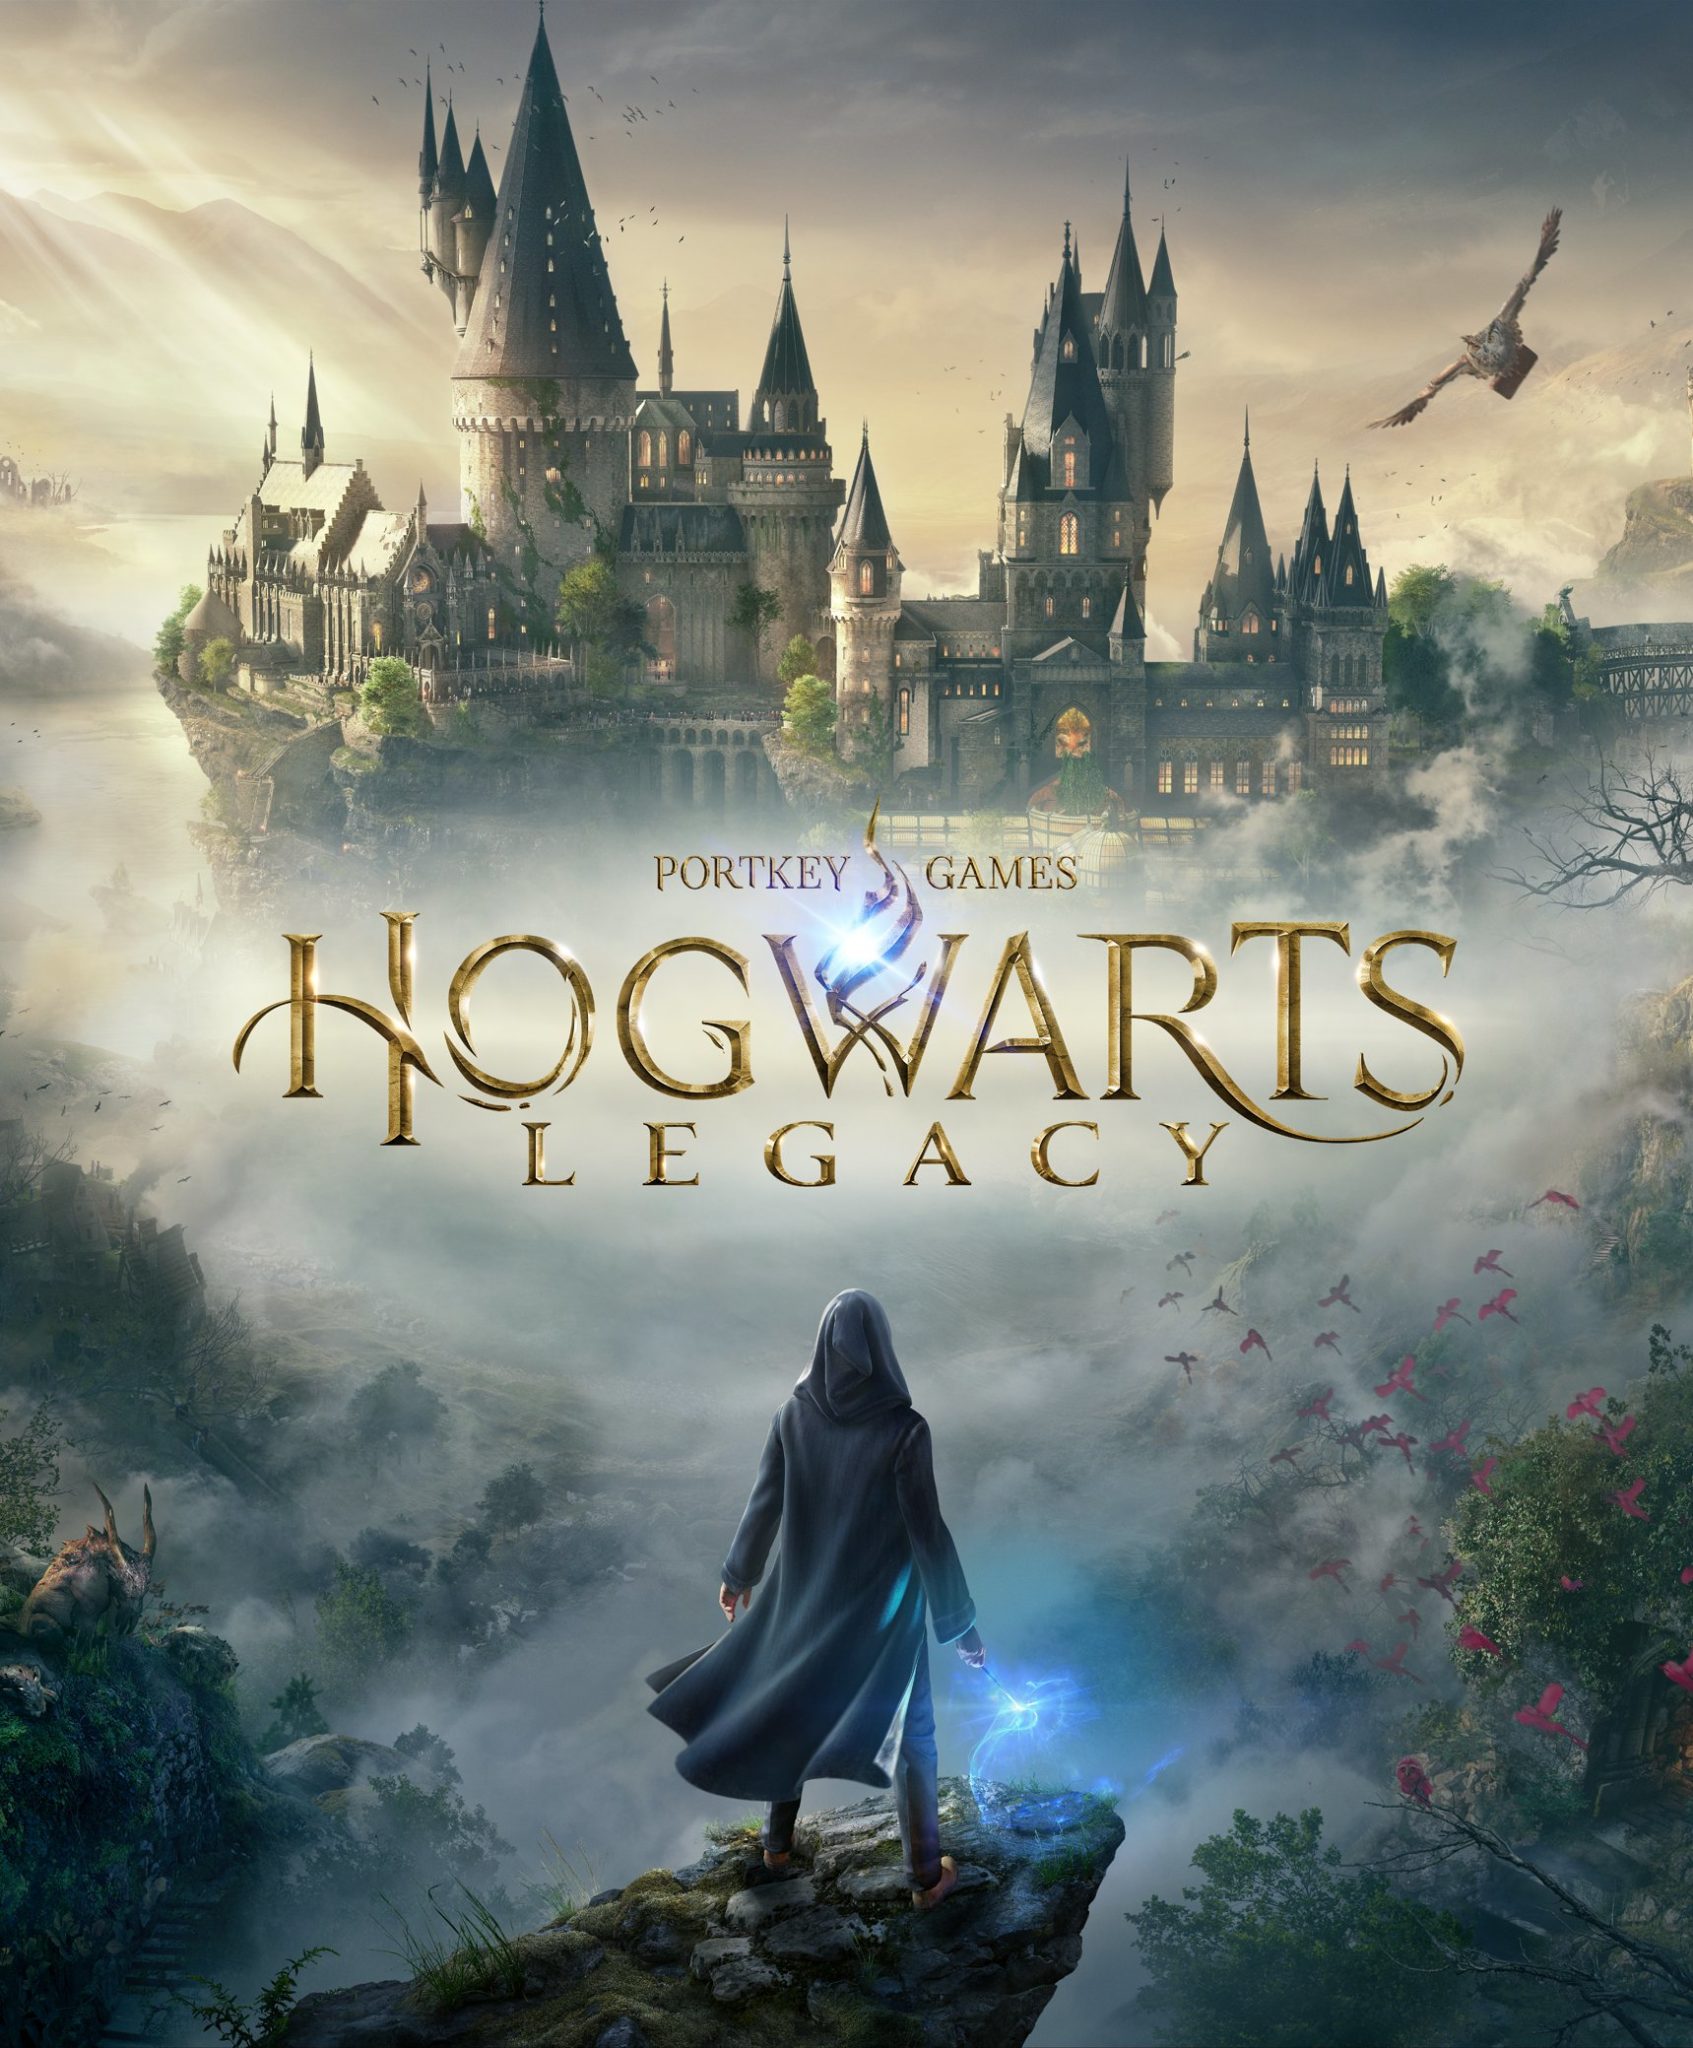 hogwarts legacies release date